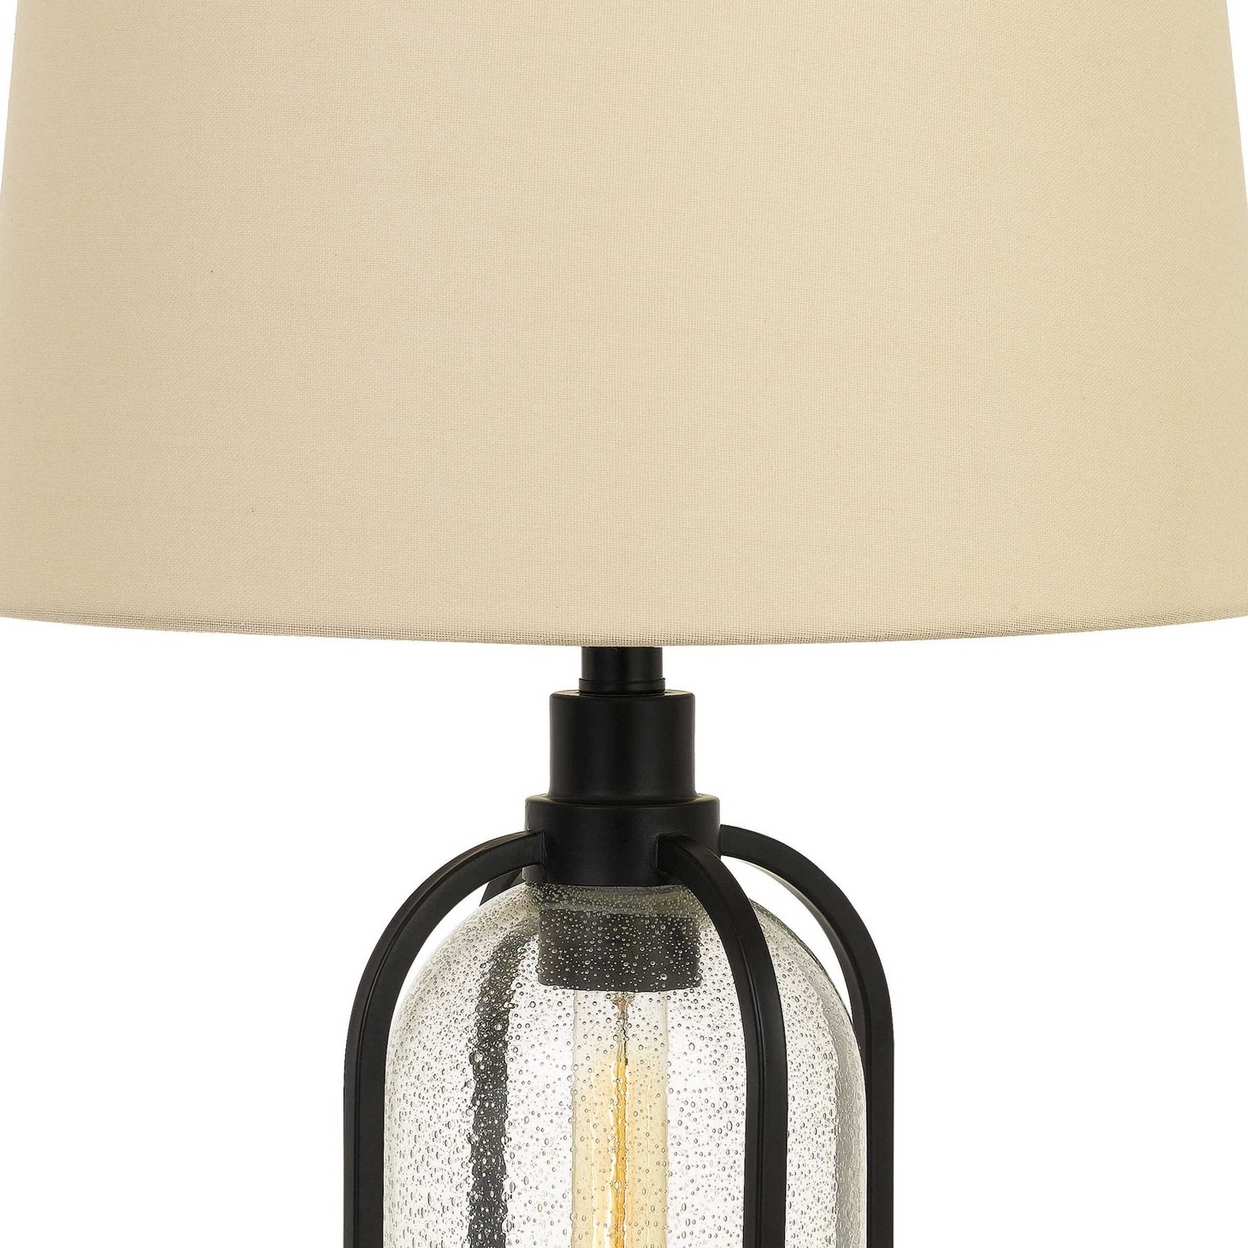 Glass Body Table Lamp With Fabric Shade And Inbuilt Night Light, Beige- Saltoro Sherpi